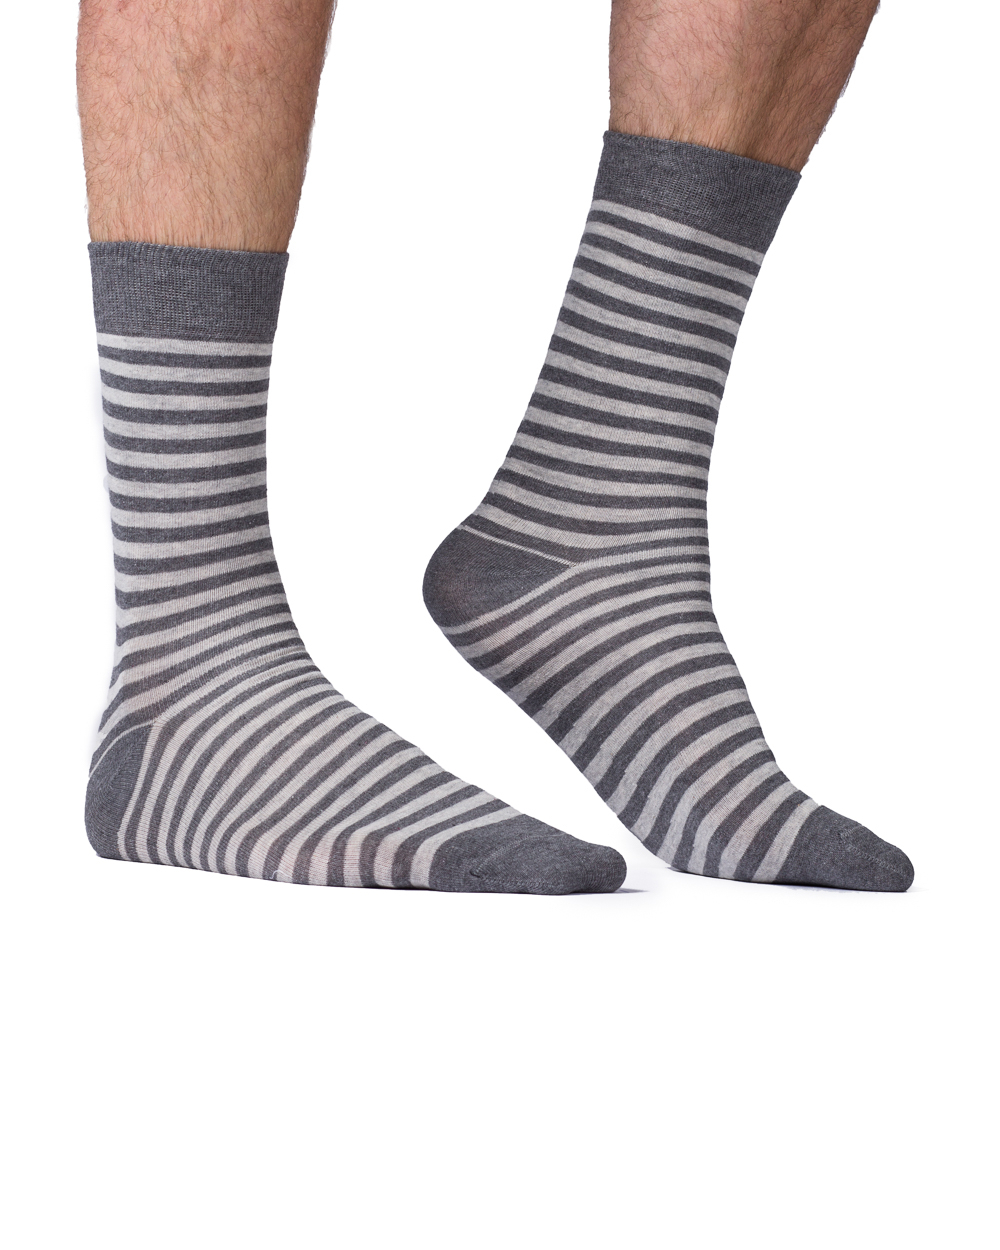 2t Patterned Socks 2 Pairs (mixed stripe) | 2tall.com